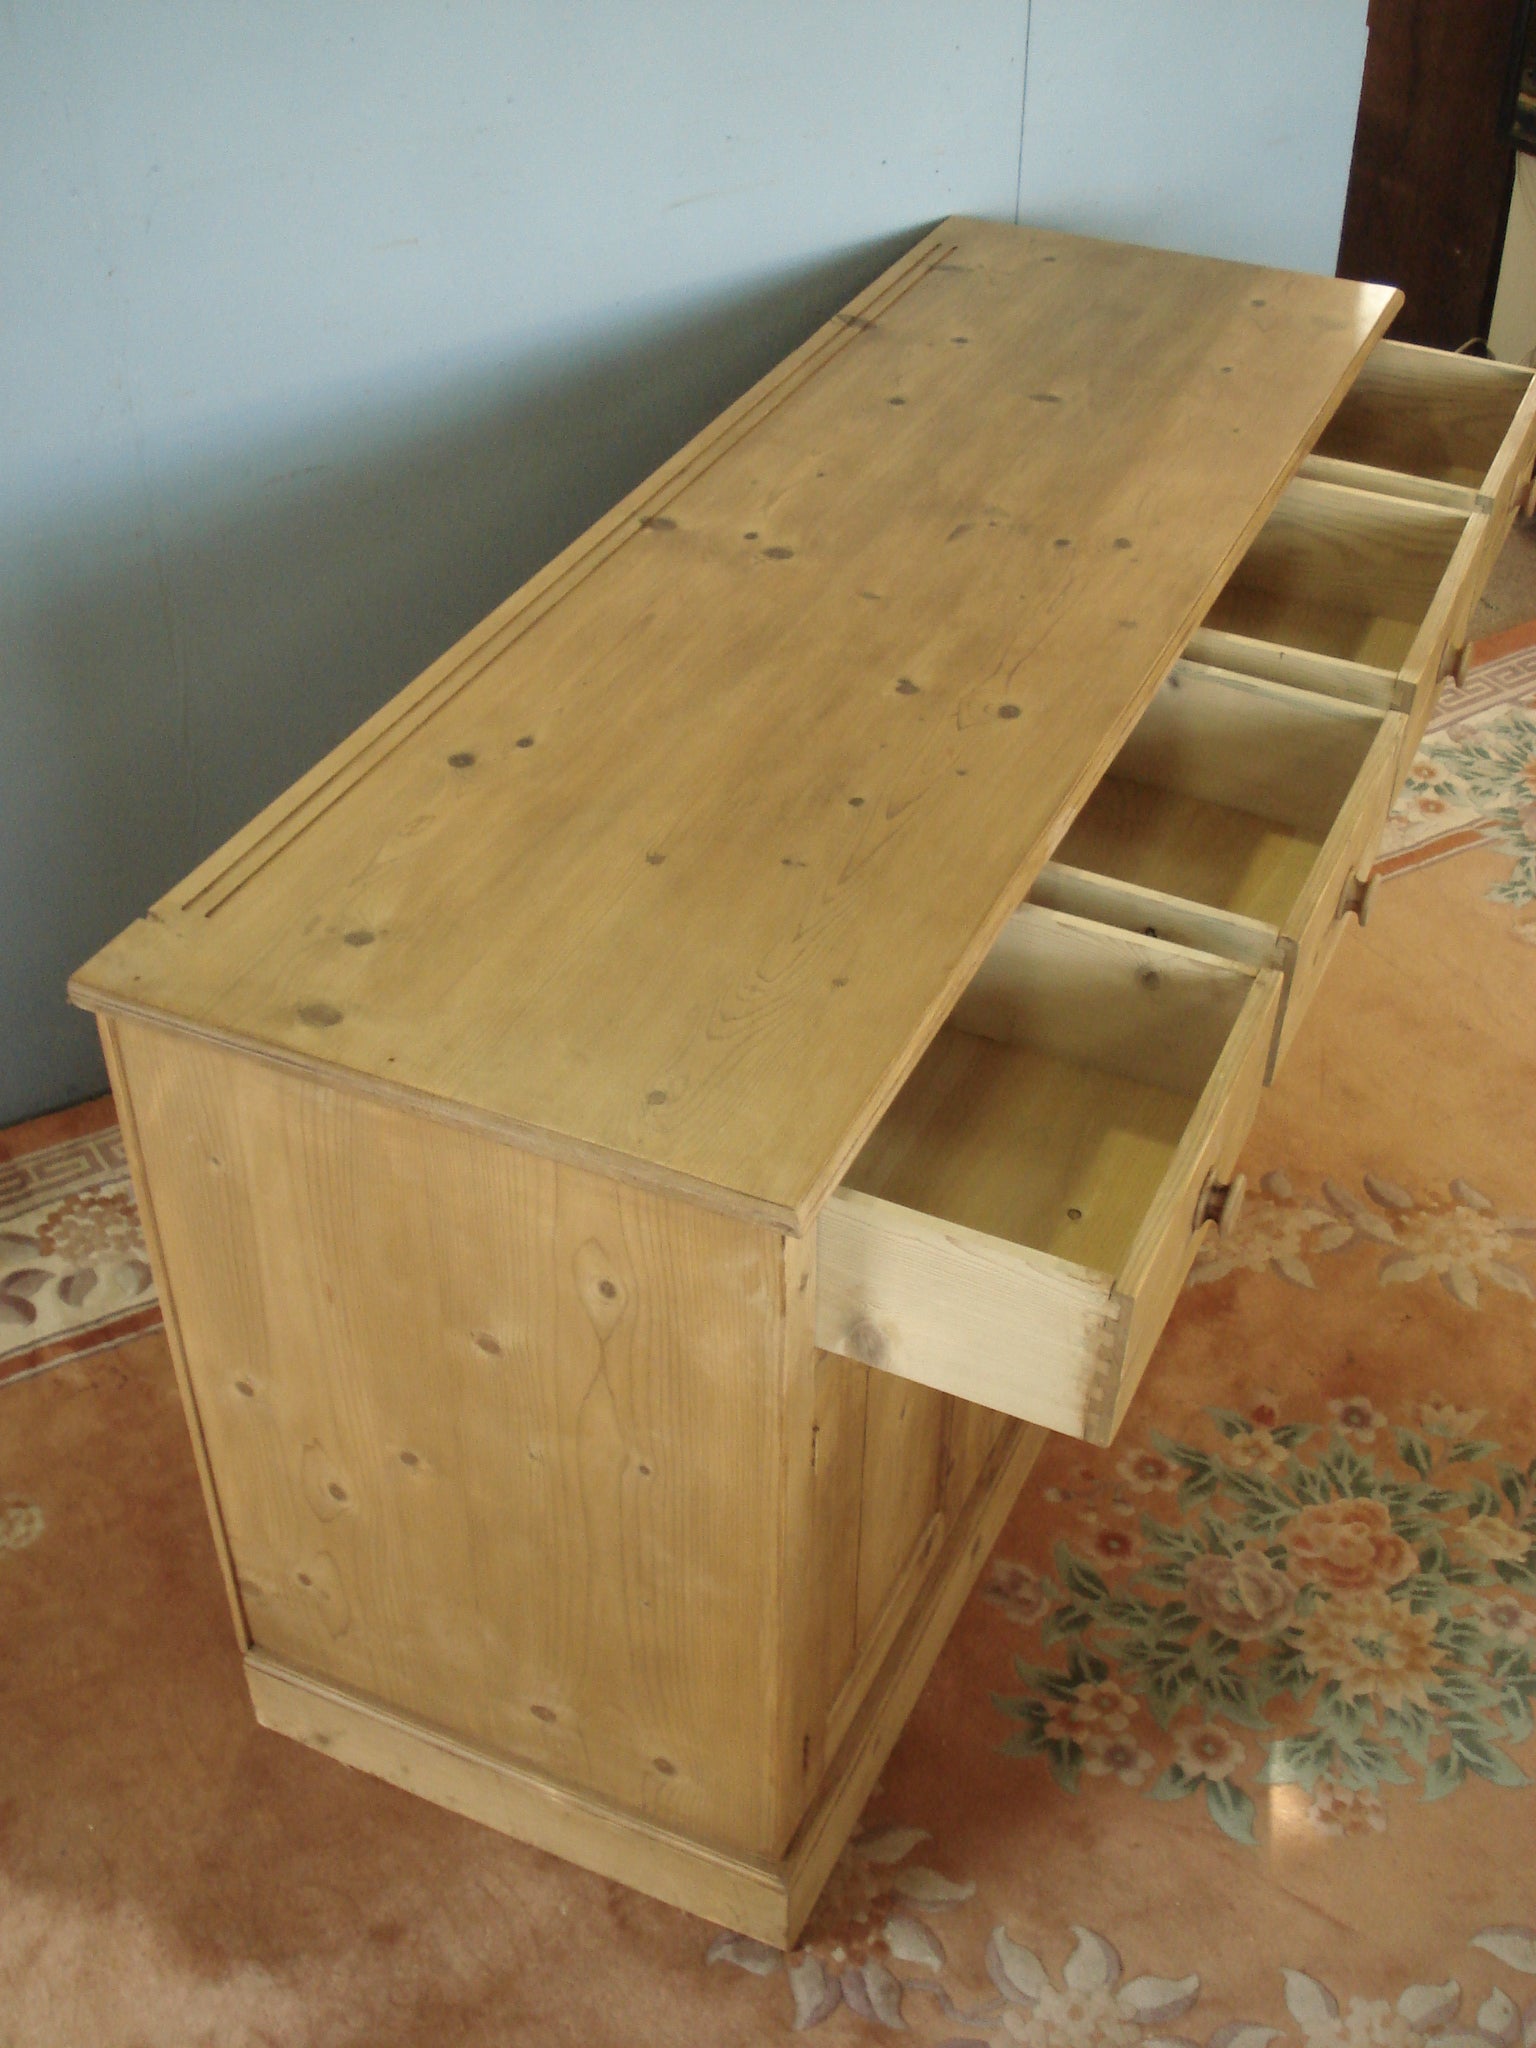 6ft. Stripped pine hand-made dresser base